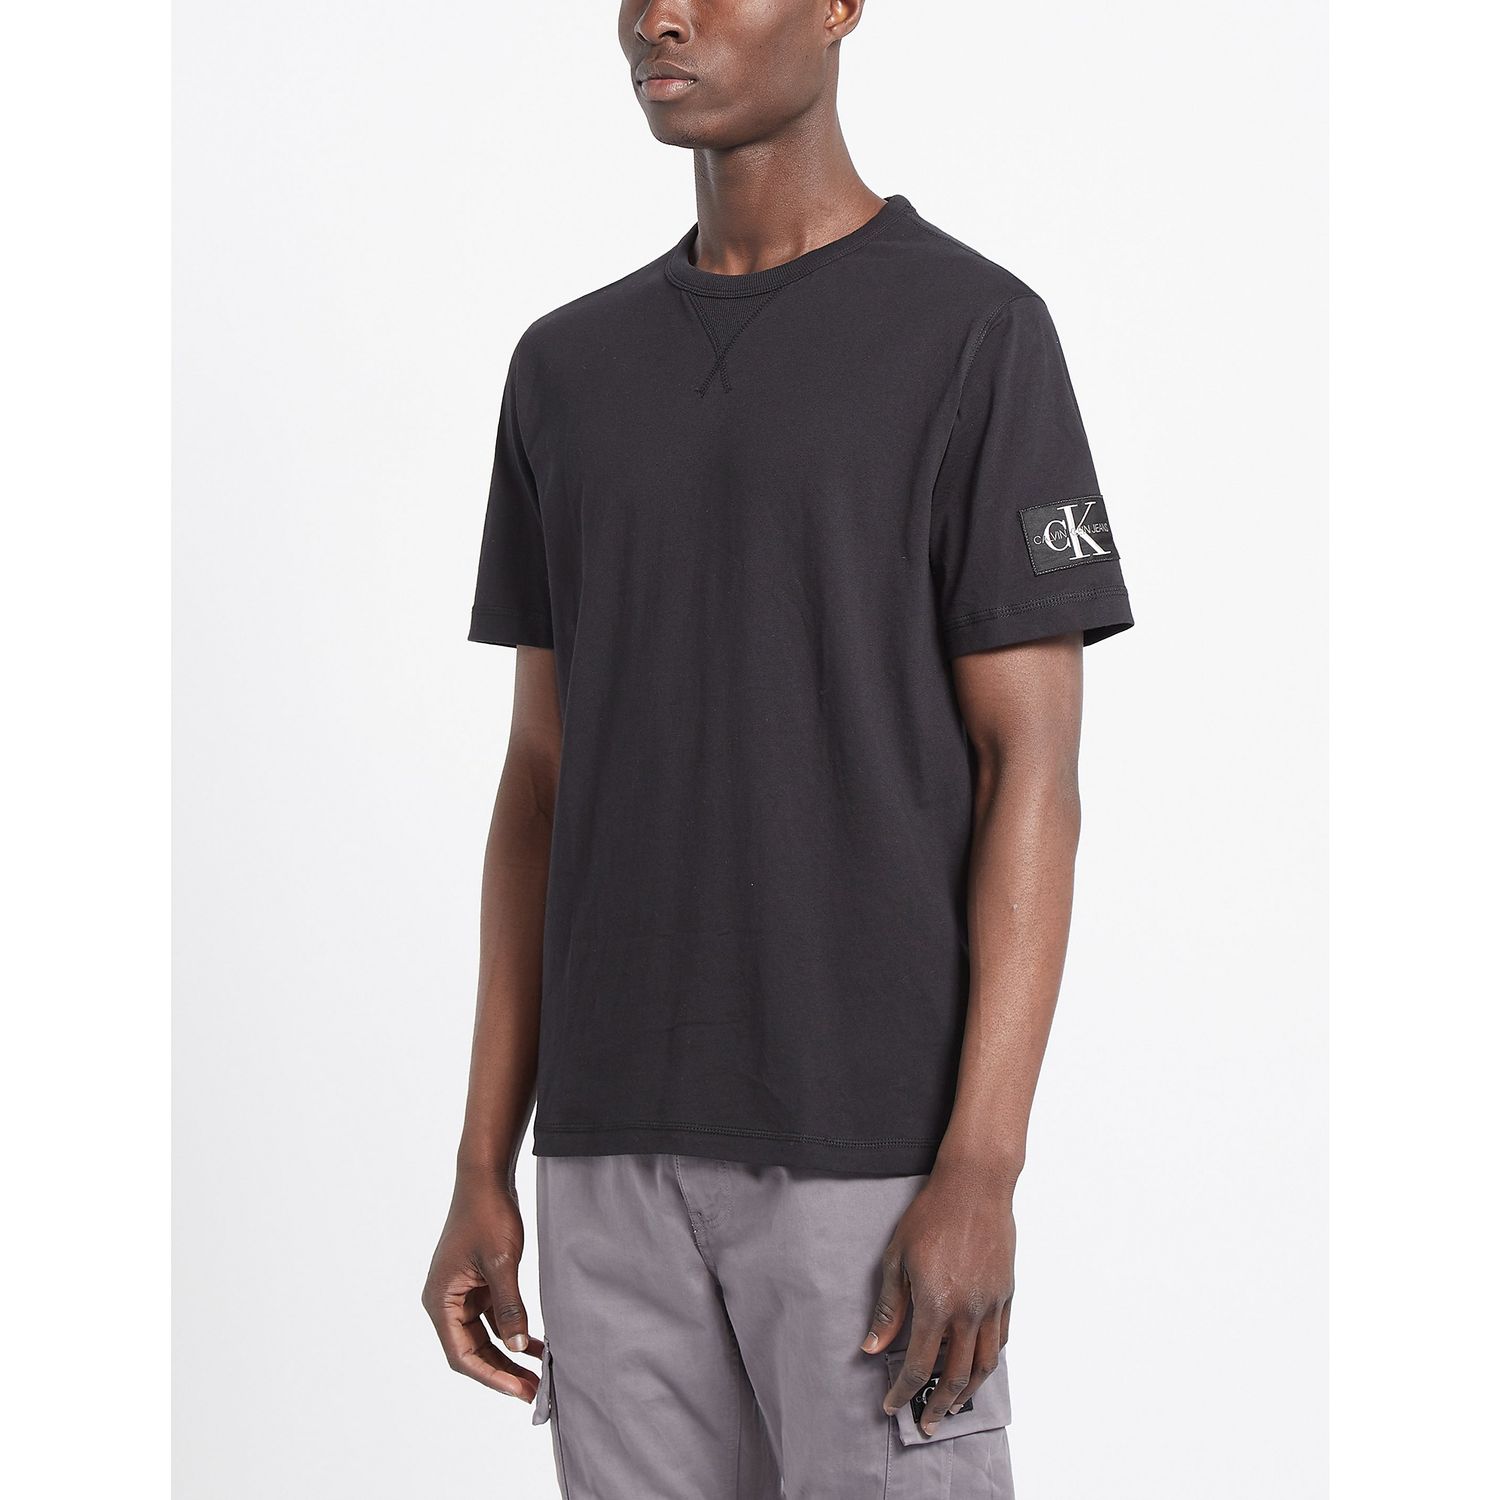 Black Calvin Klein Mens Monogram Get T-Shirt Badge The - Label